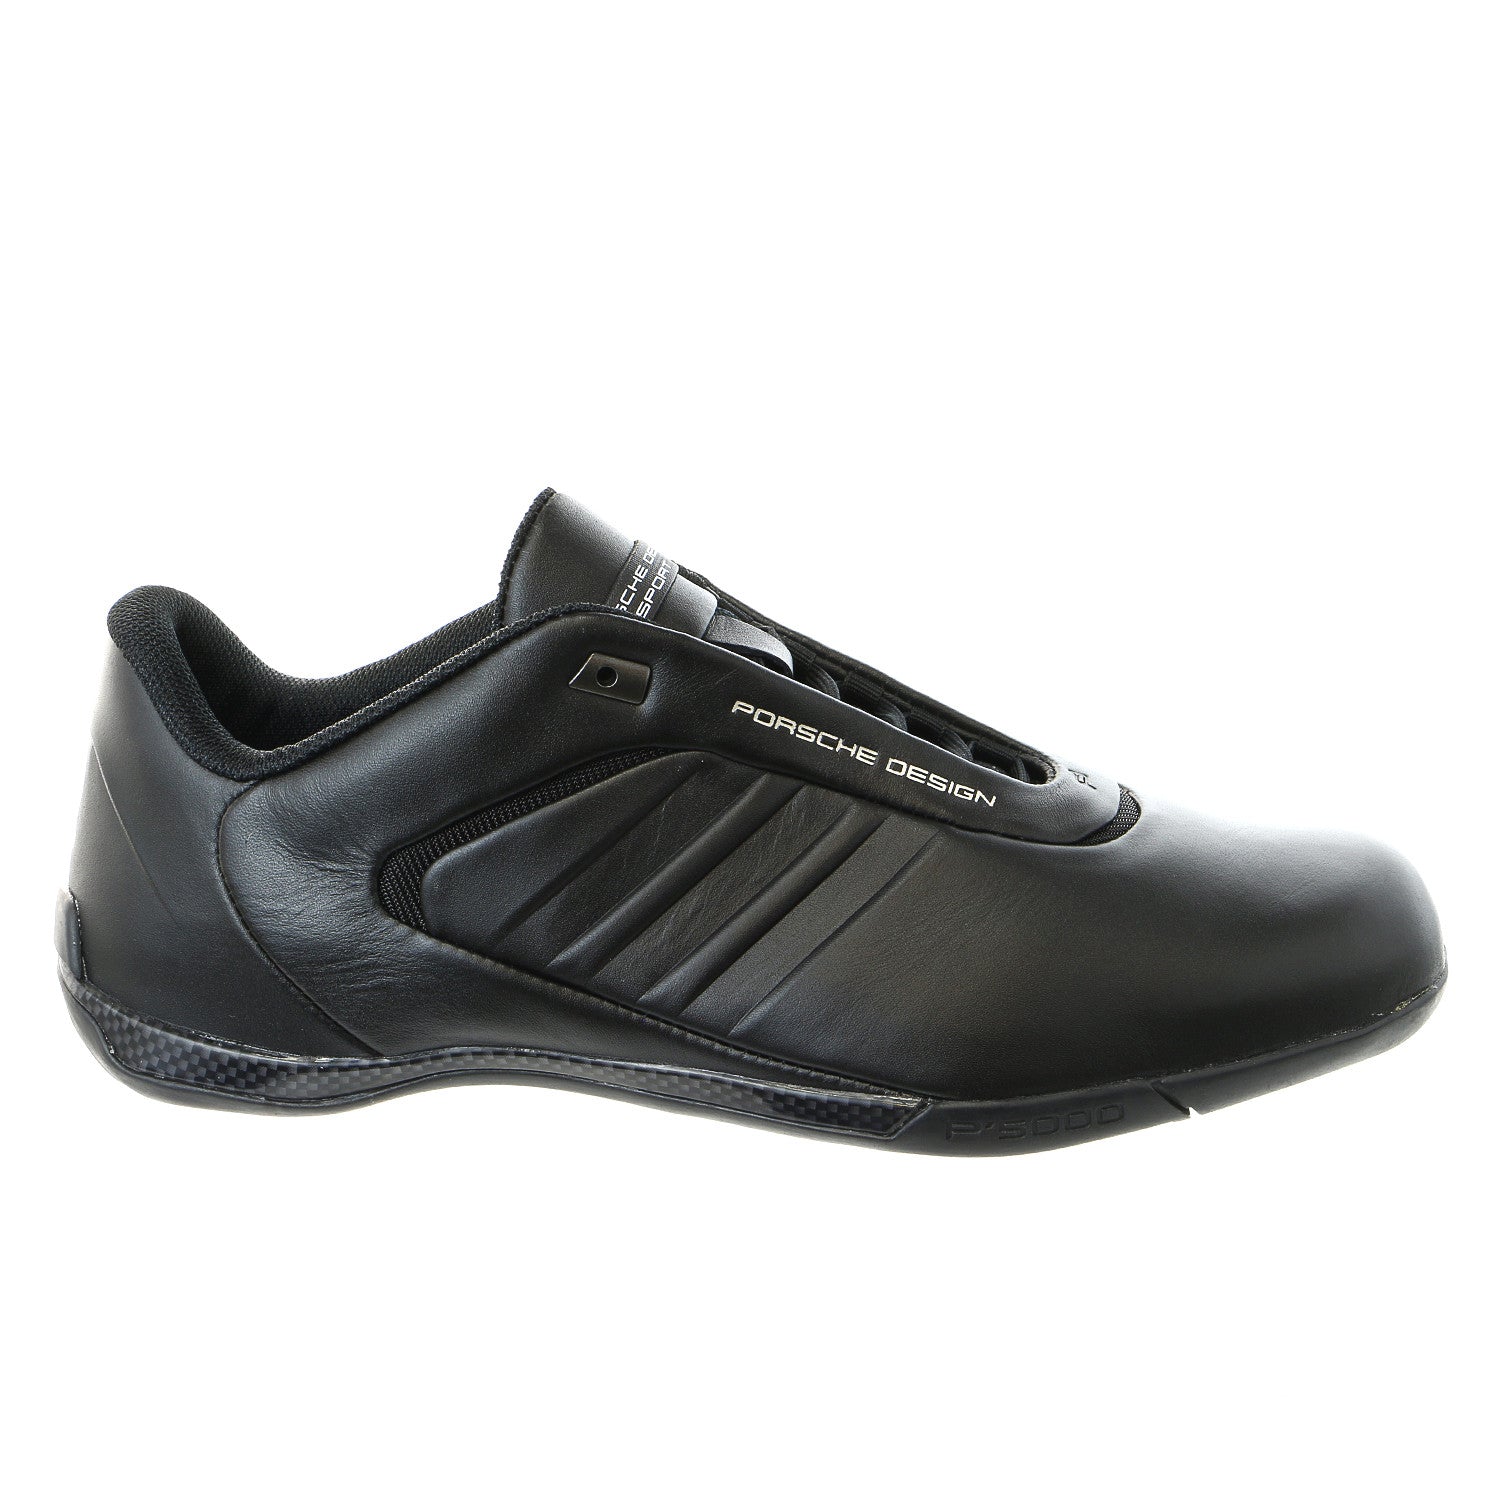 Porsche Design Athletic III Leather Fashion Sneaker Driving Shoe - - Shoplifestyle